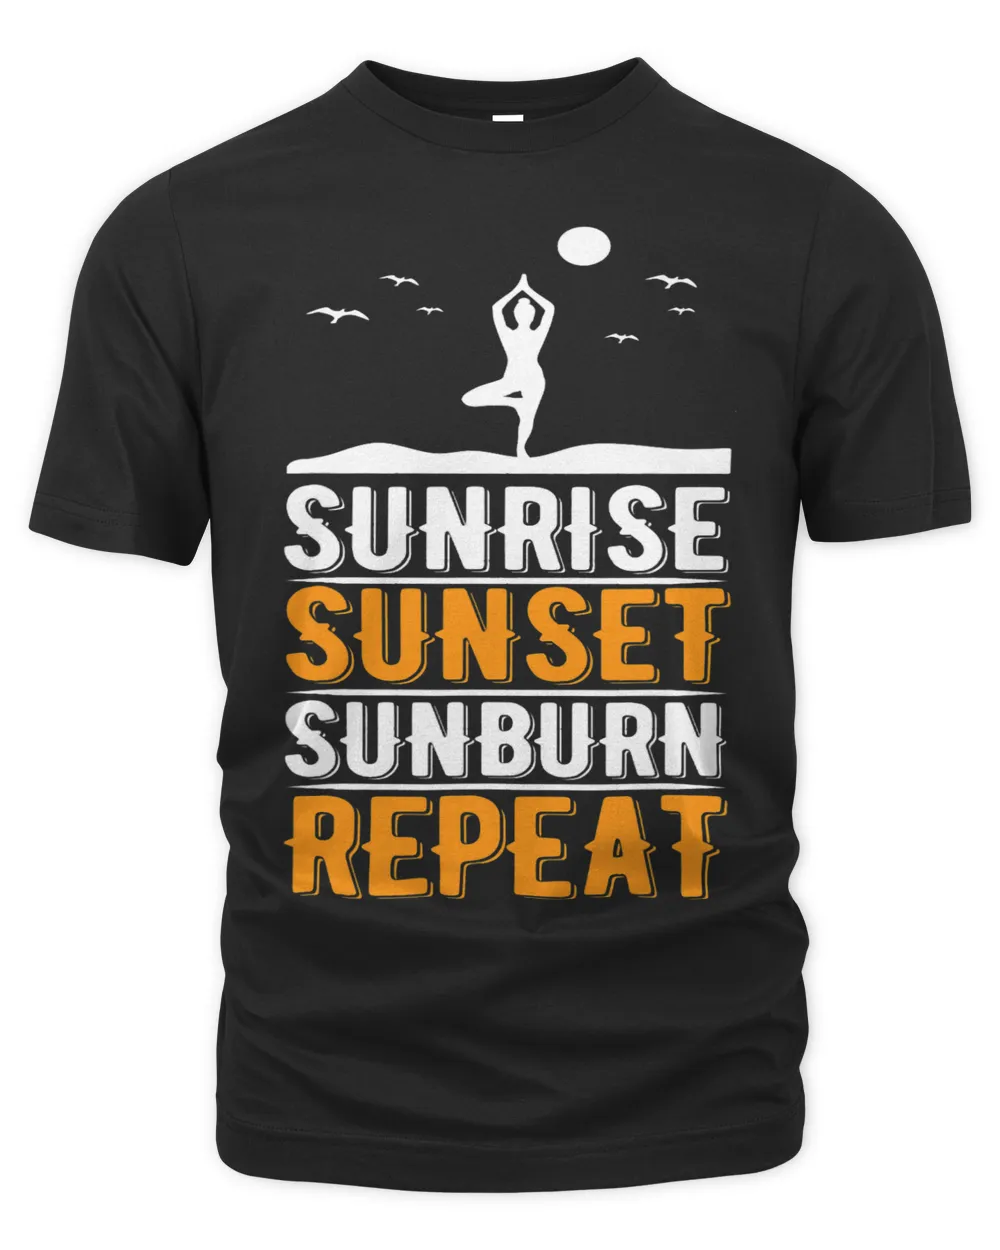 Sunrise Sunset Sunburn Repeat Yoga Instructor Meditation